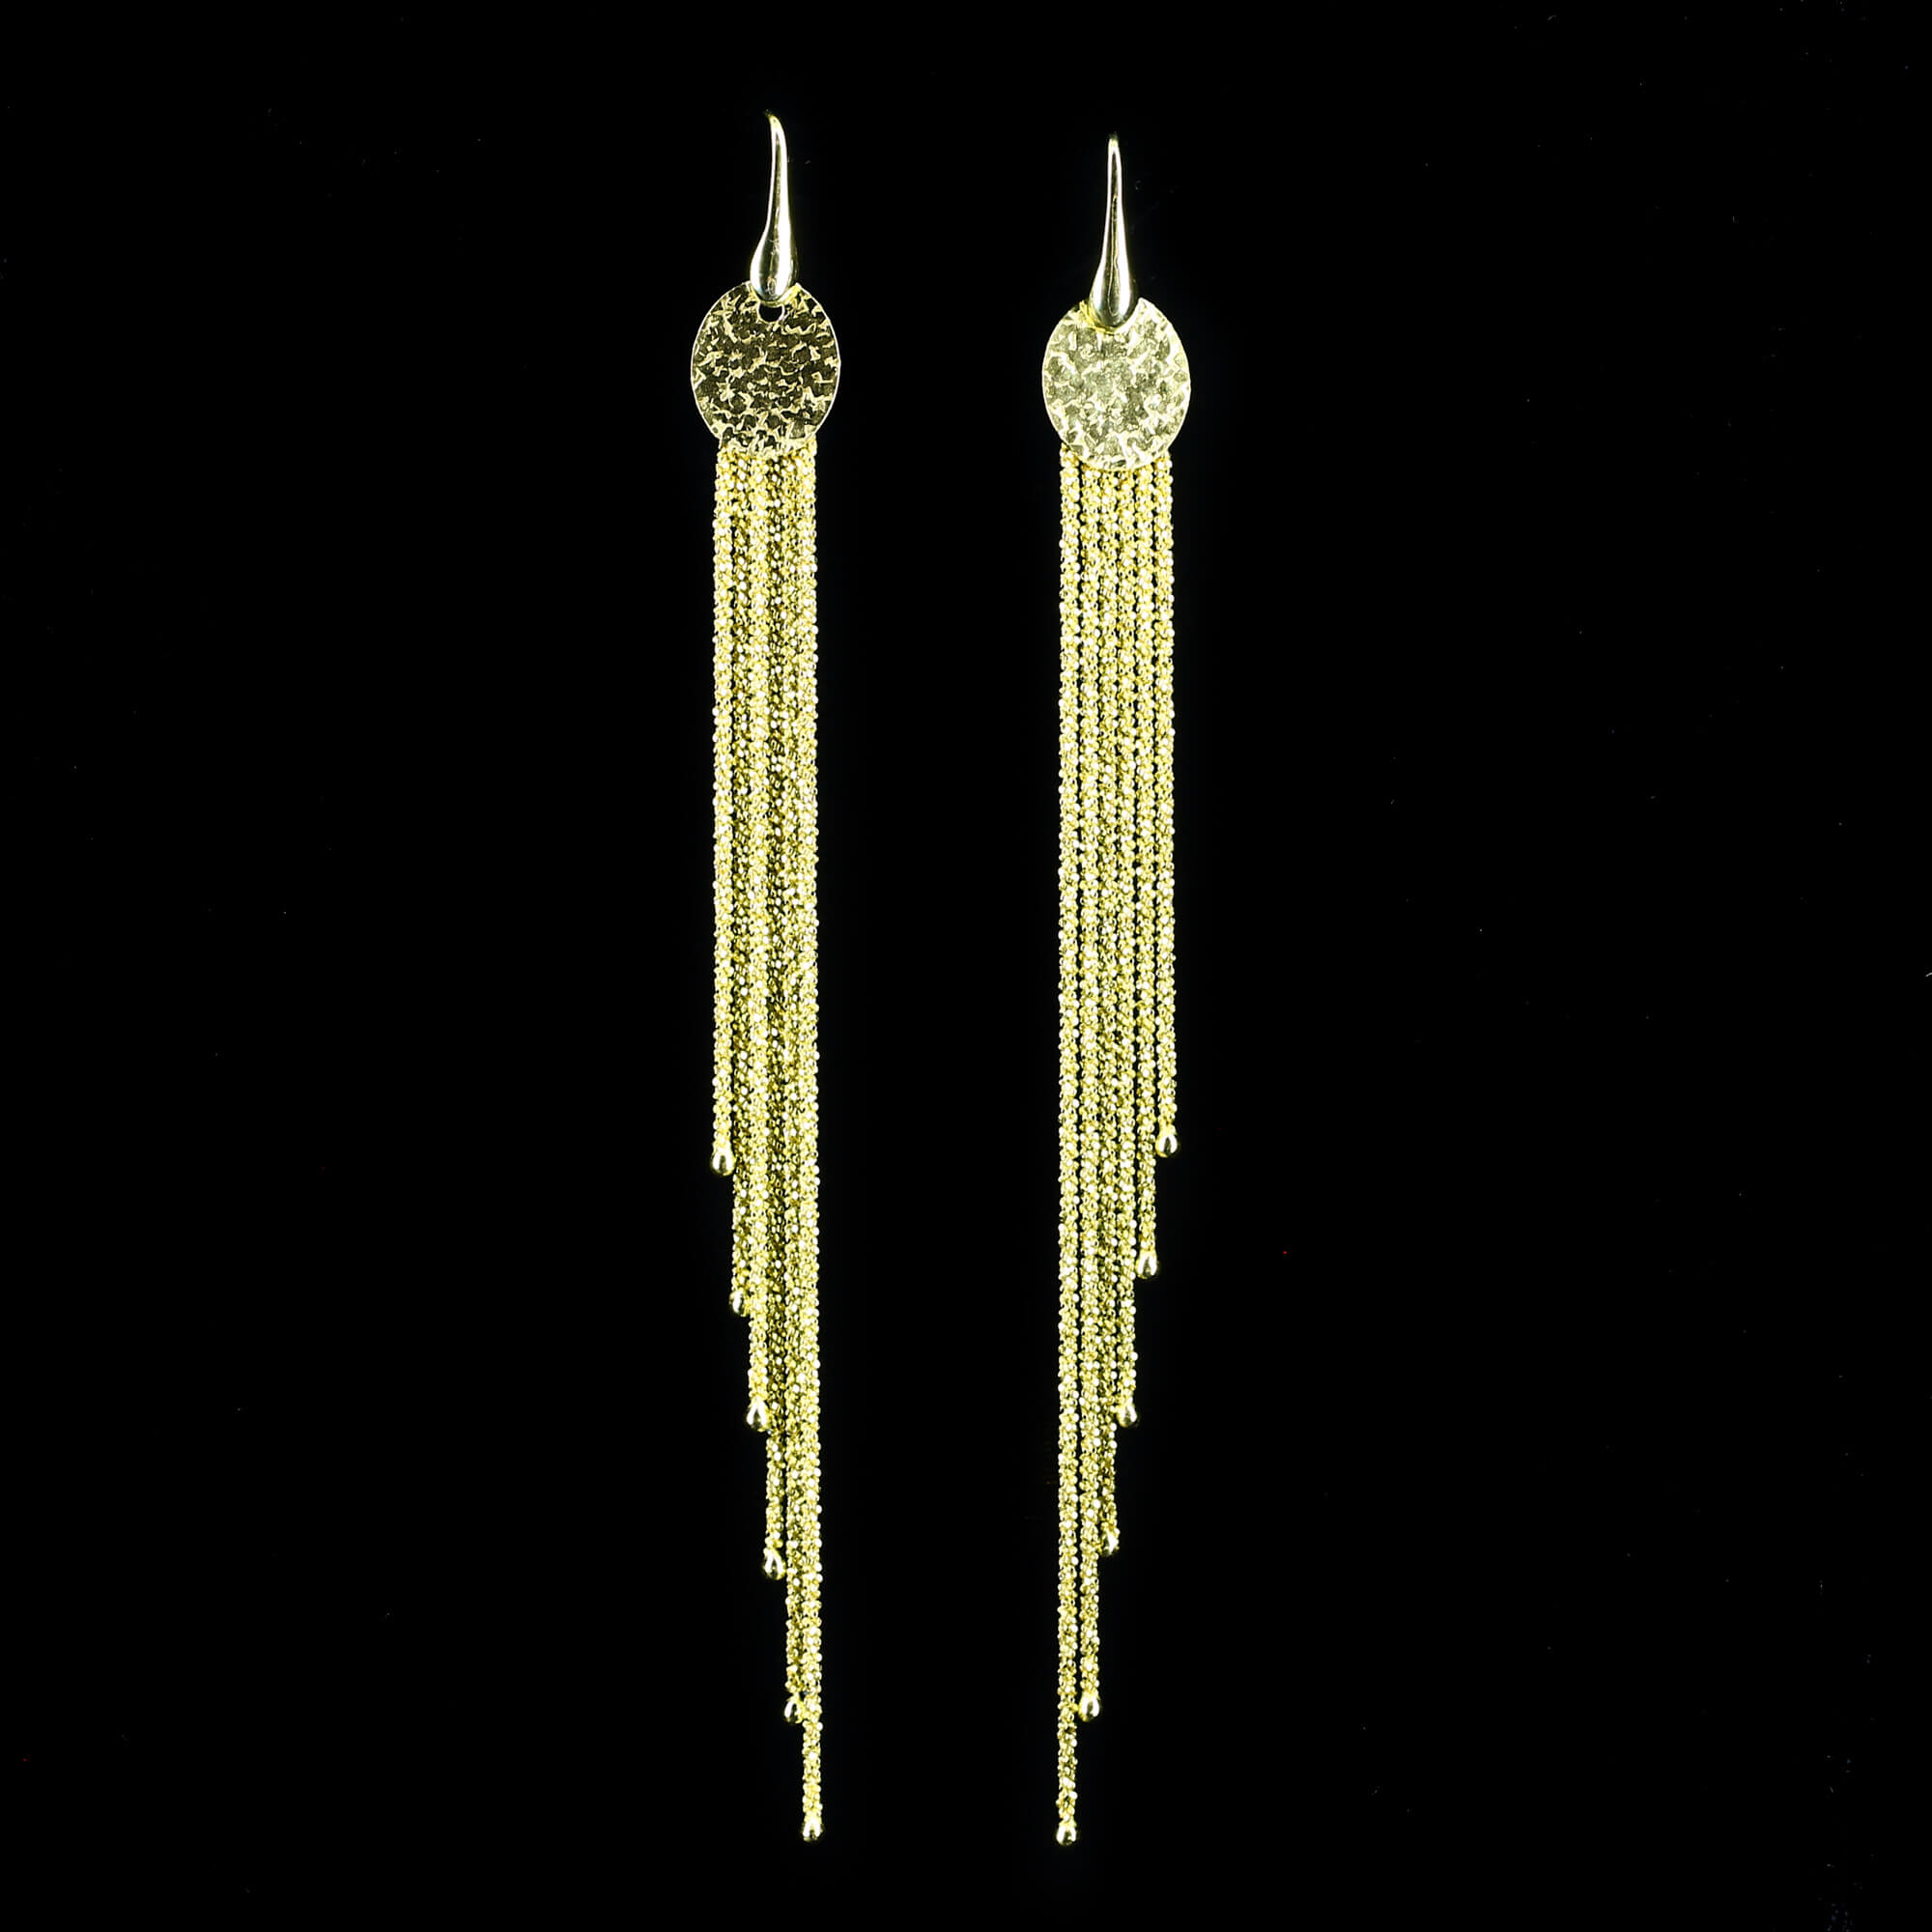 Sanjoya earrings, gold-plated and long